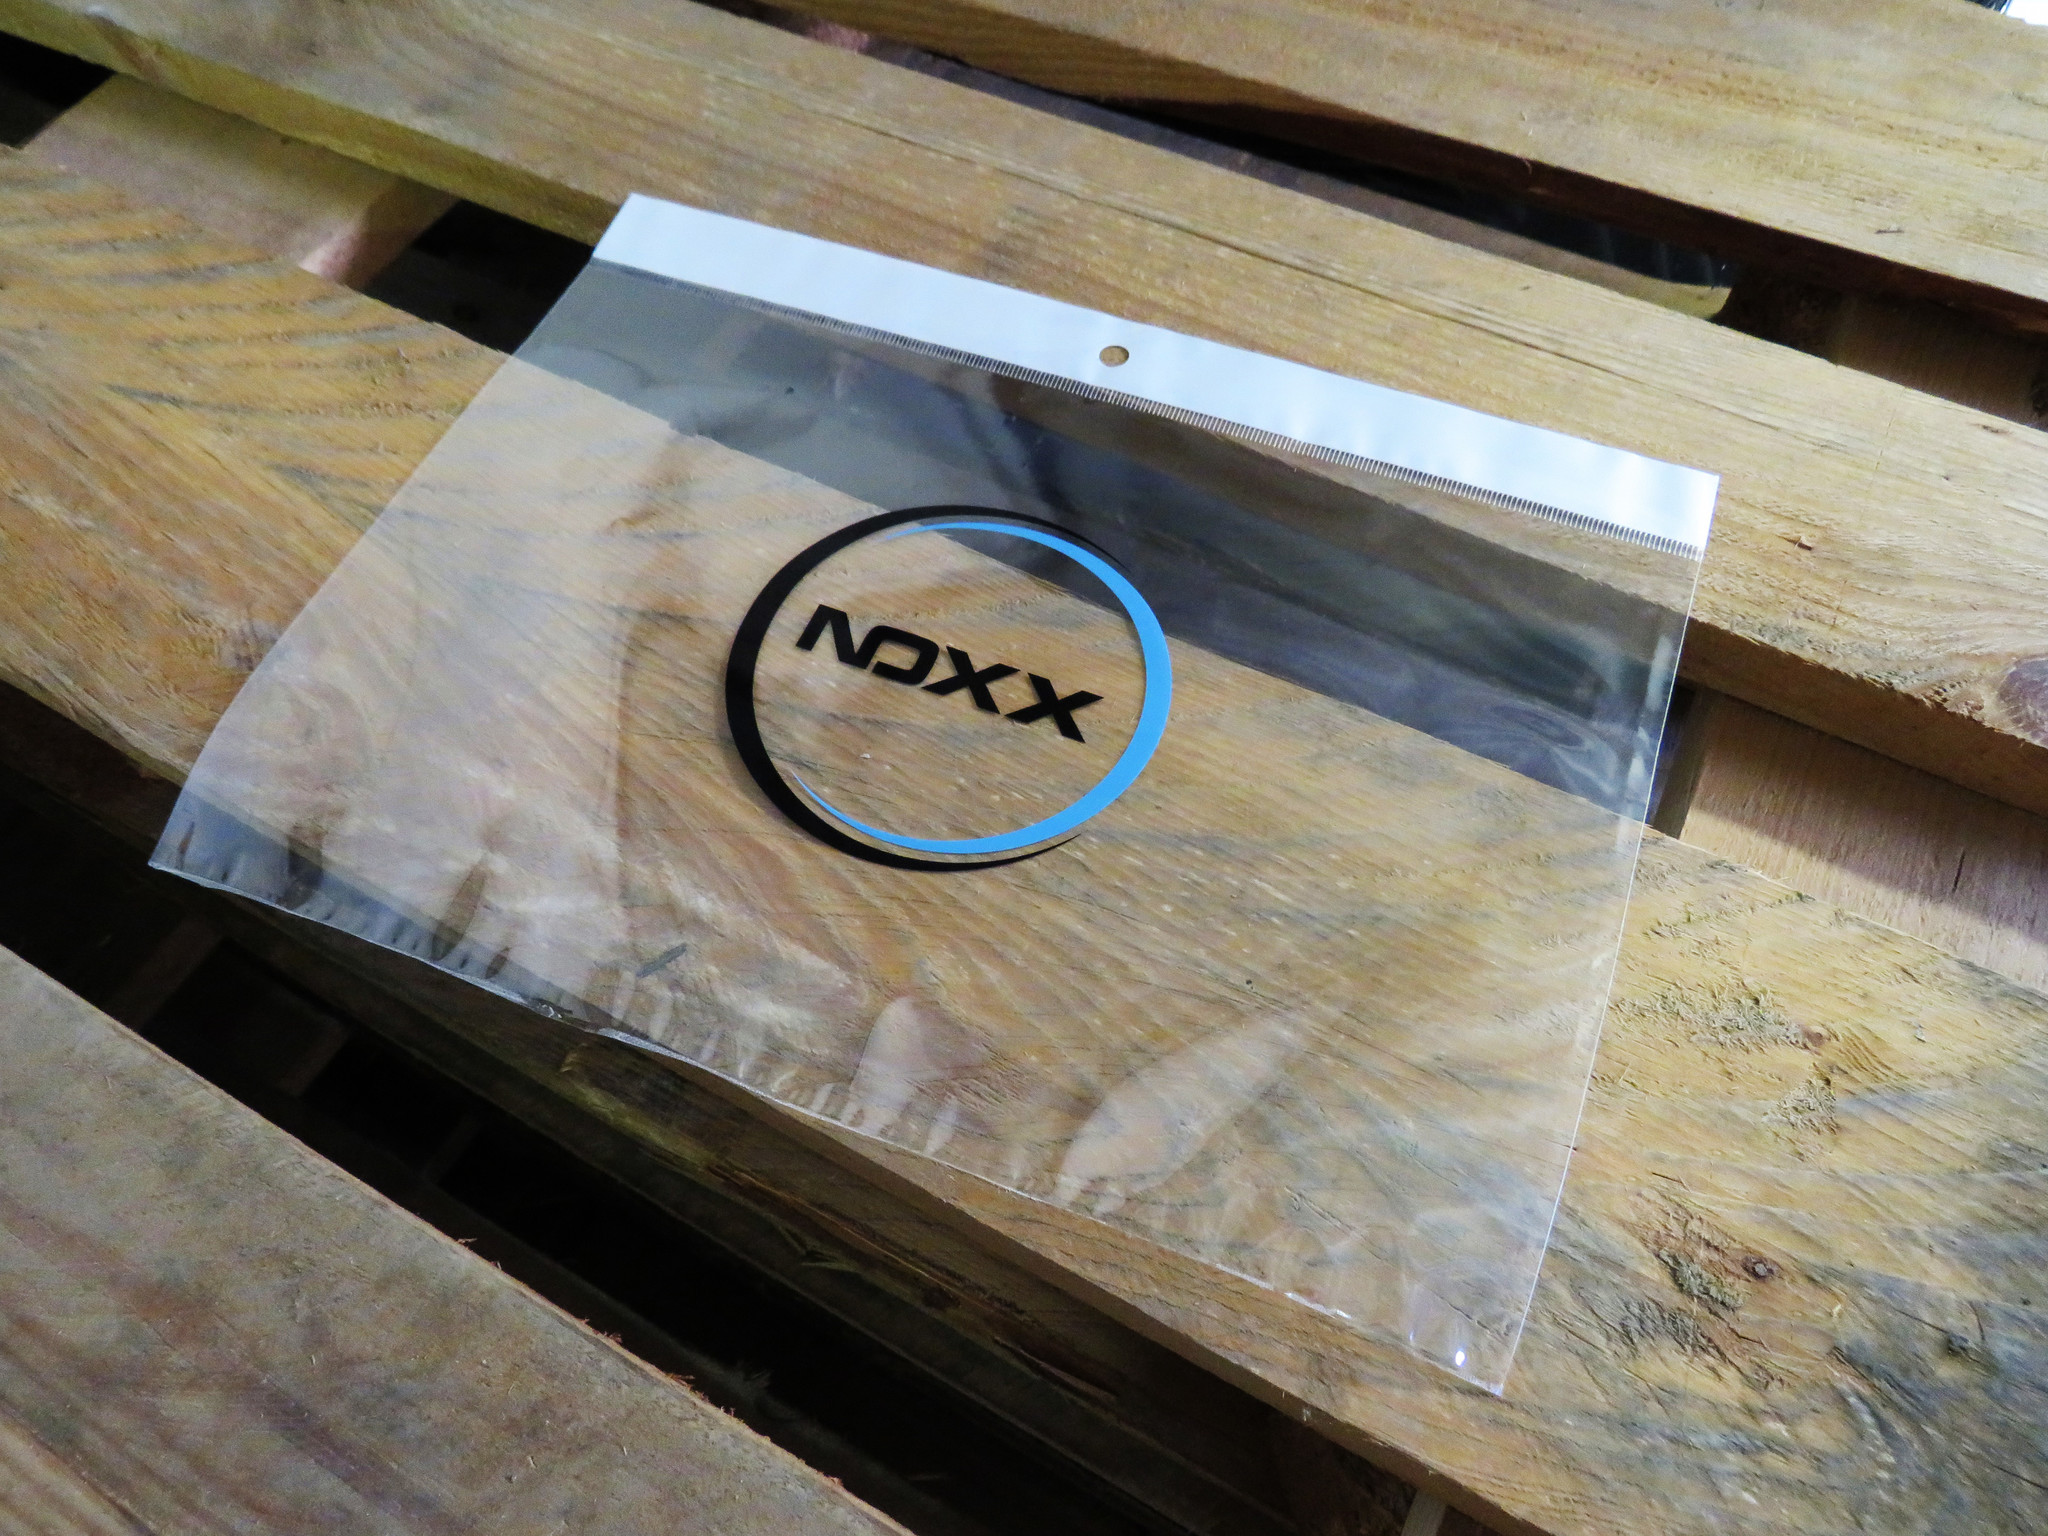 NoXx iPad 10.2 2019 Hoesje Kinderhoes Shockproof Cover Case - Paars